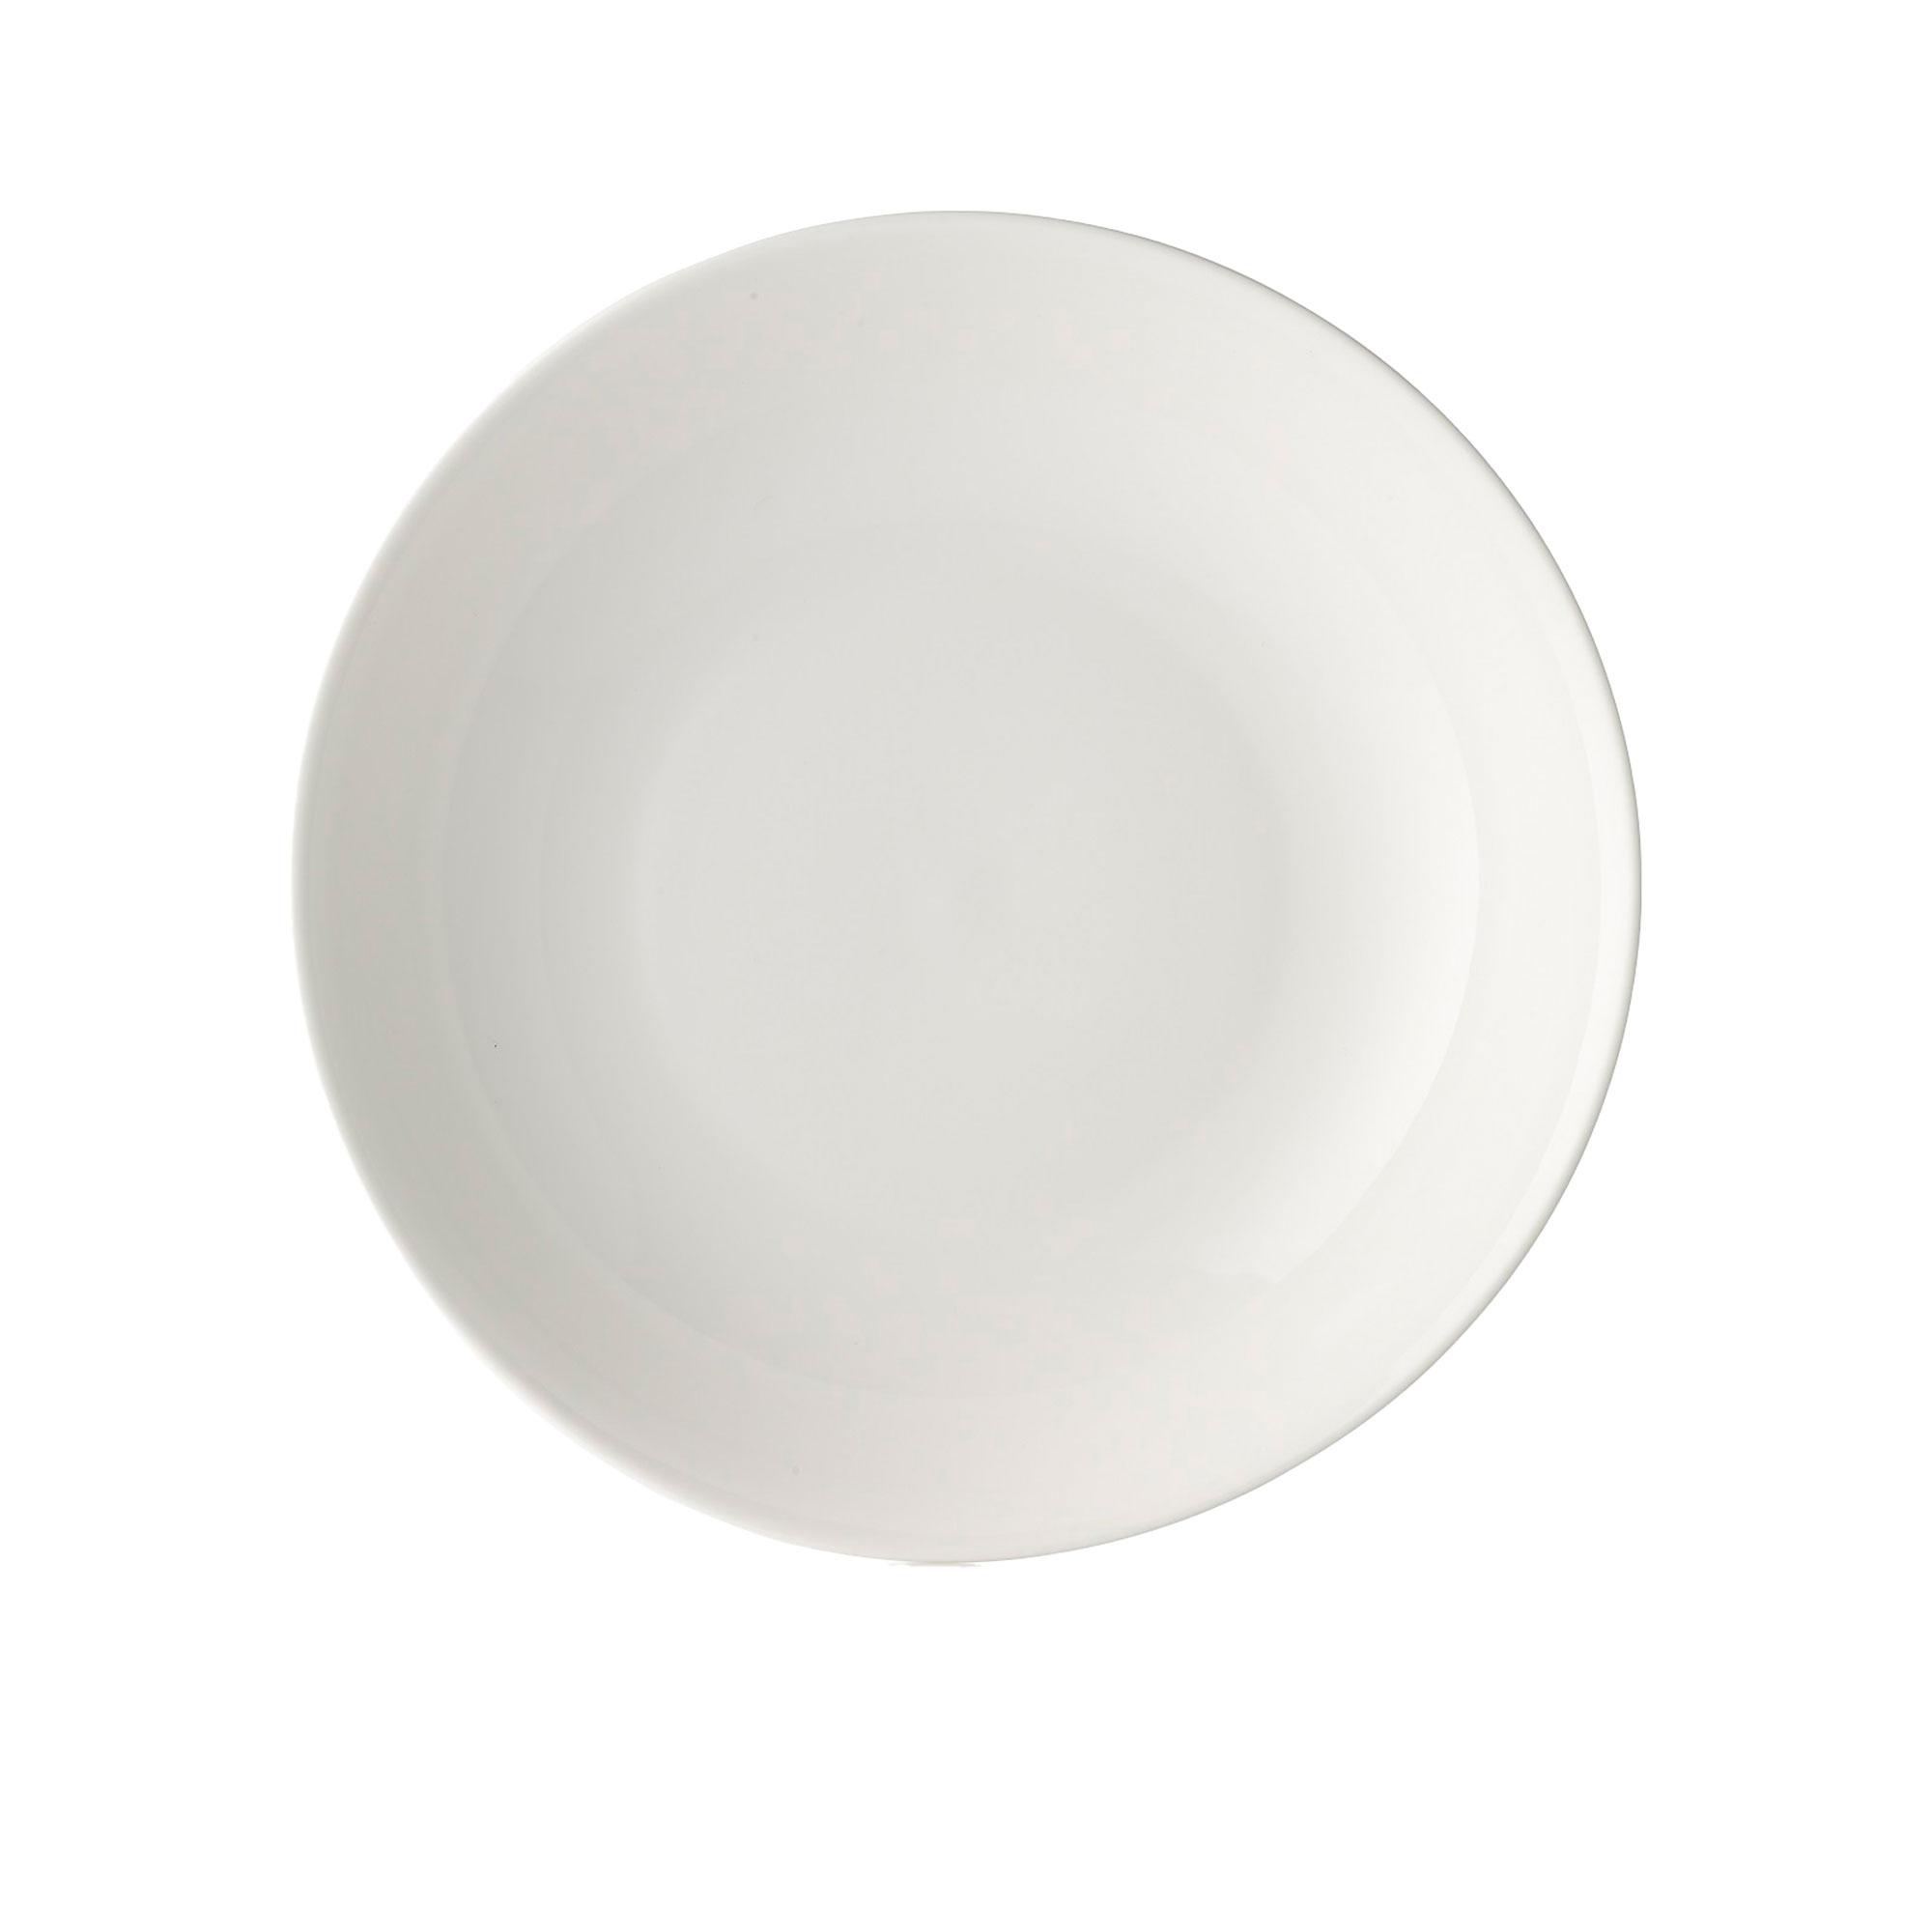 Noritake Everyday by Adam Liaw Pasta Bowl Set of 4 White Image 5